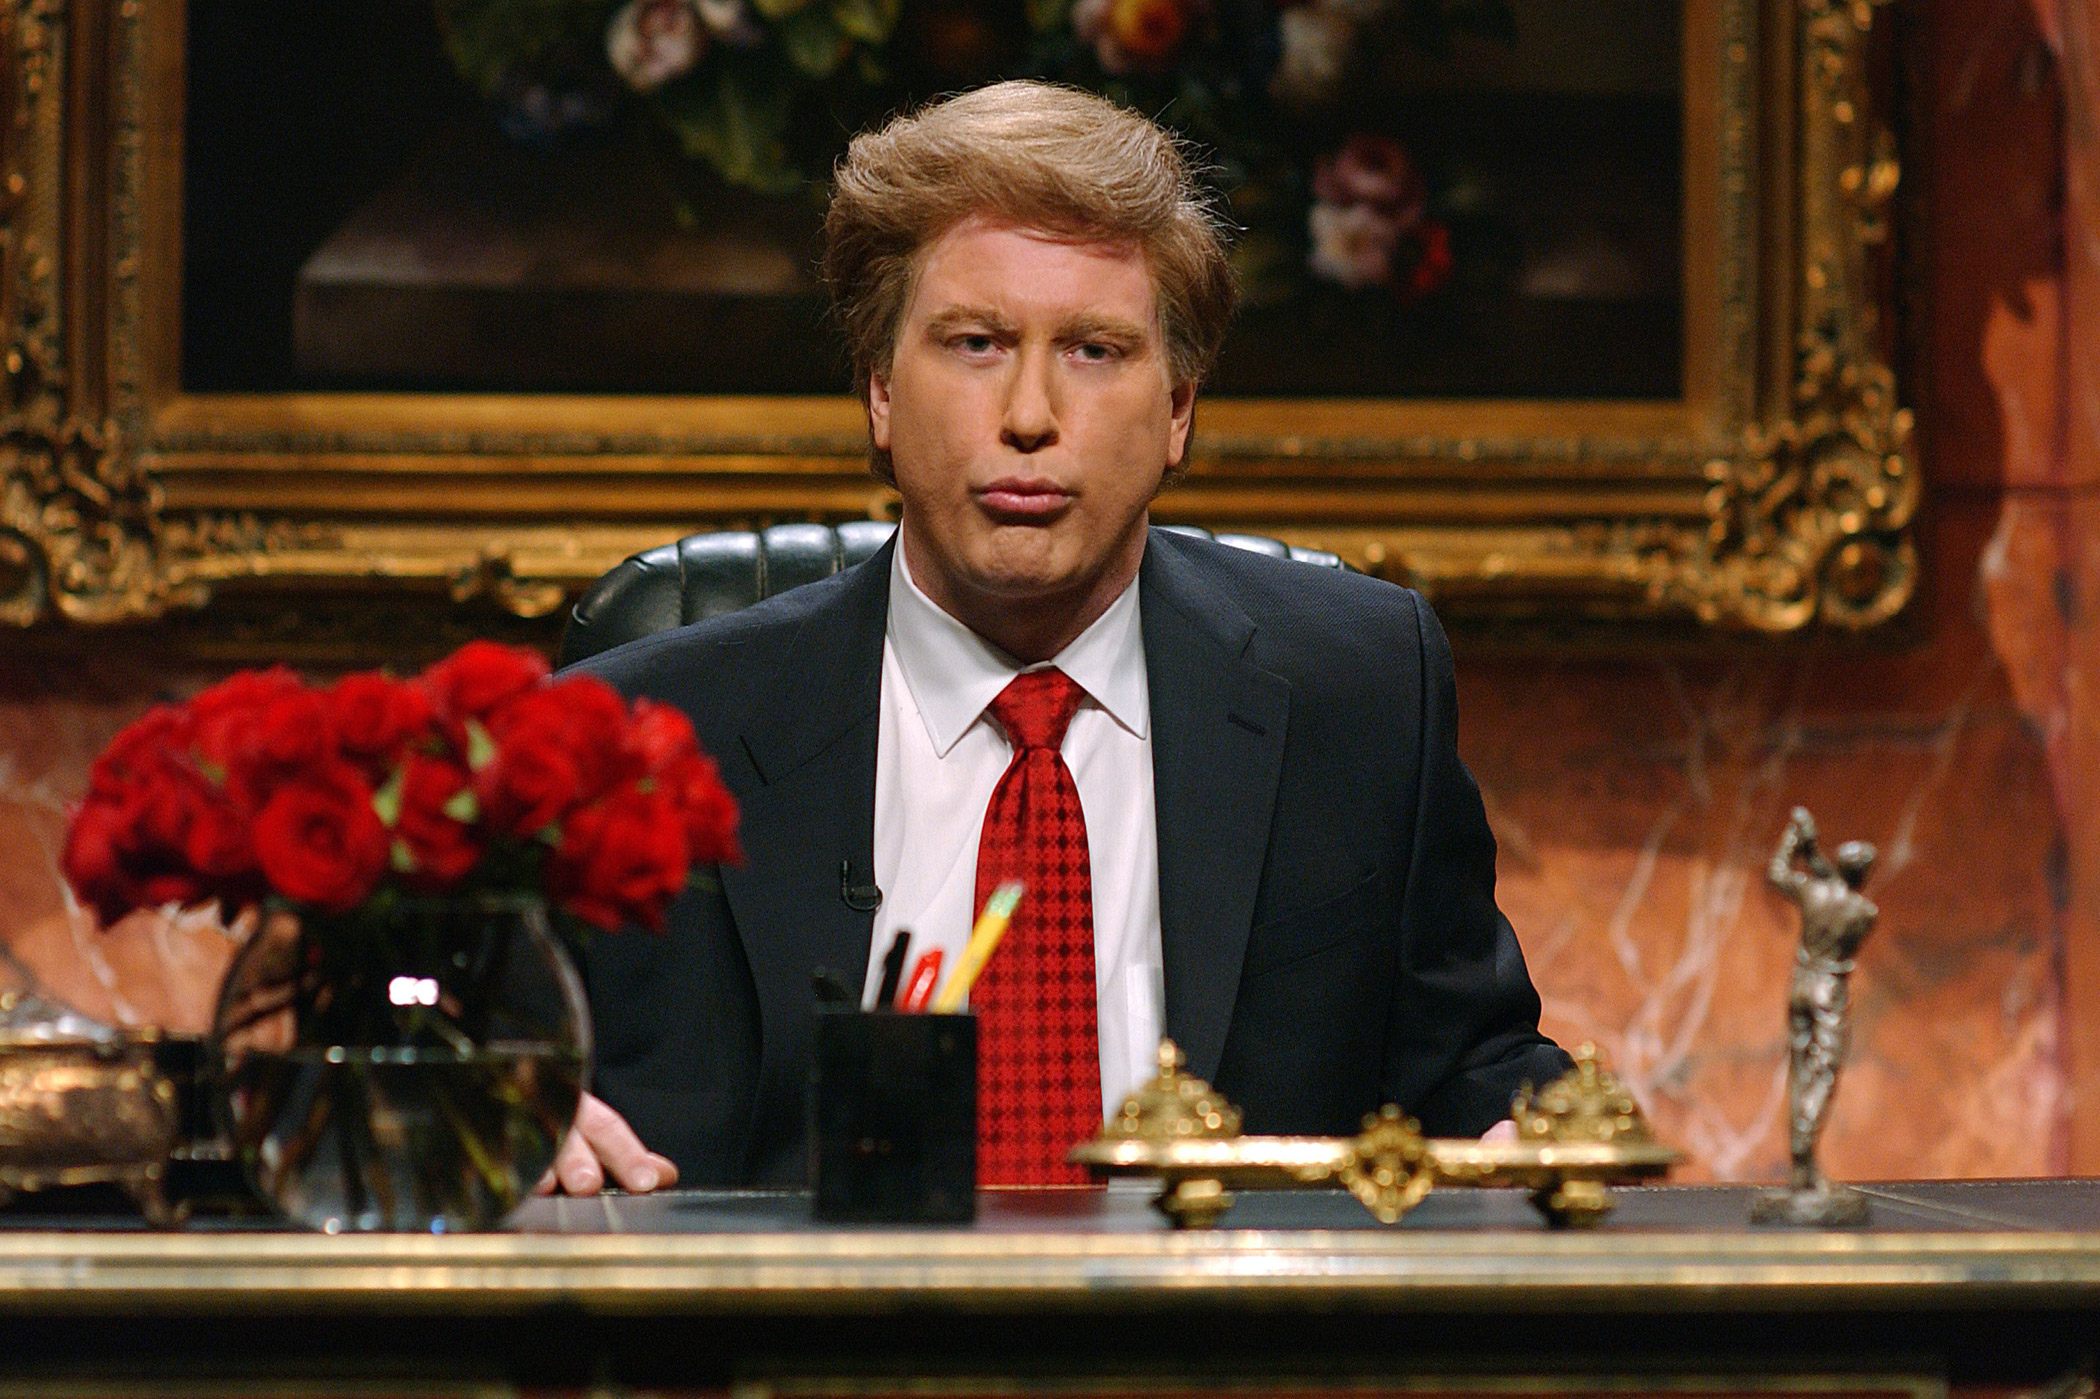 Darrell Hammond played Donald Trump during the "Donald Trump's Address" skit on Jan. 10, 2004.